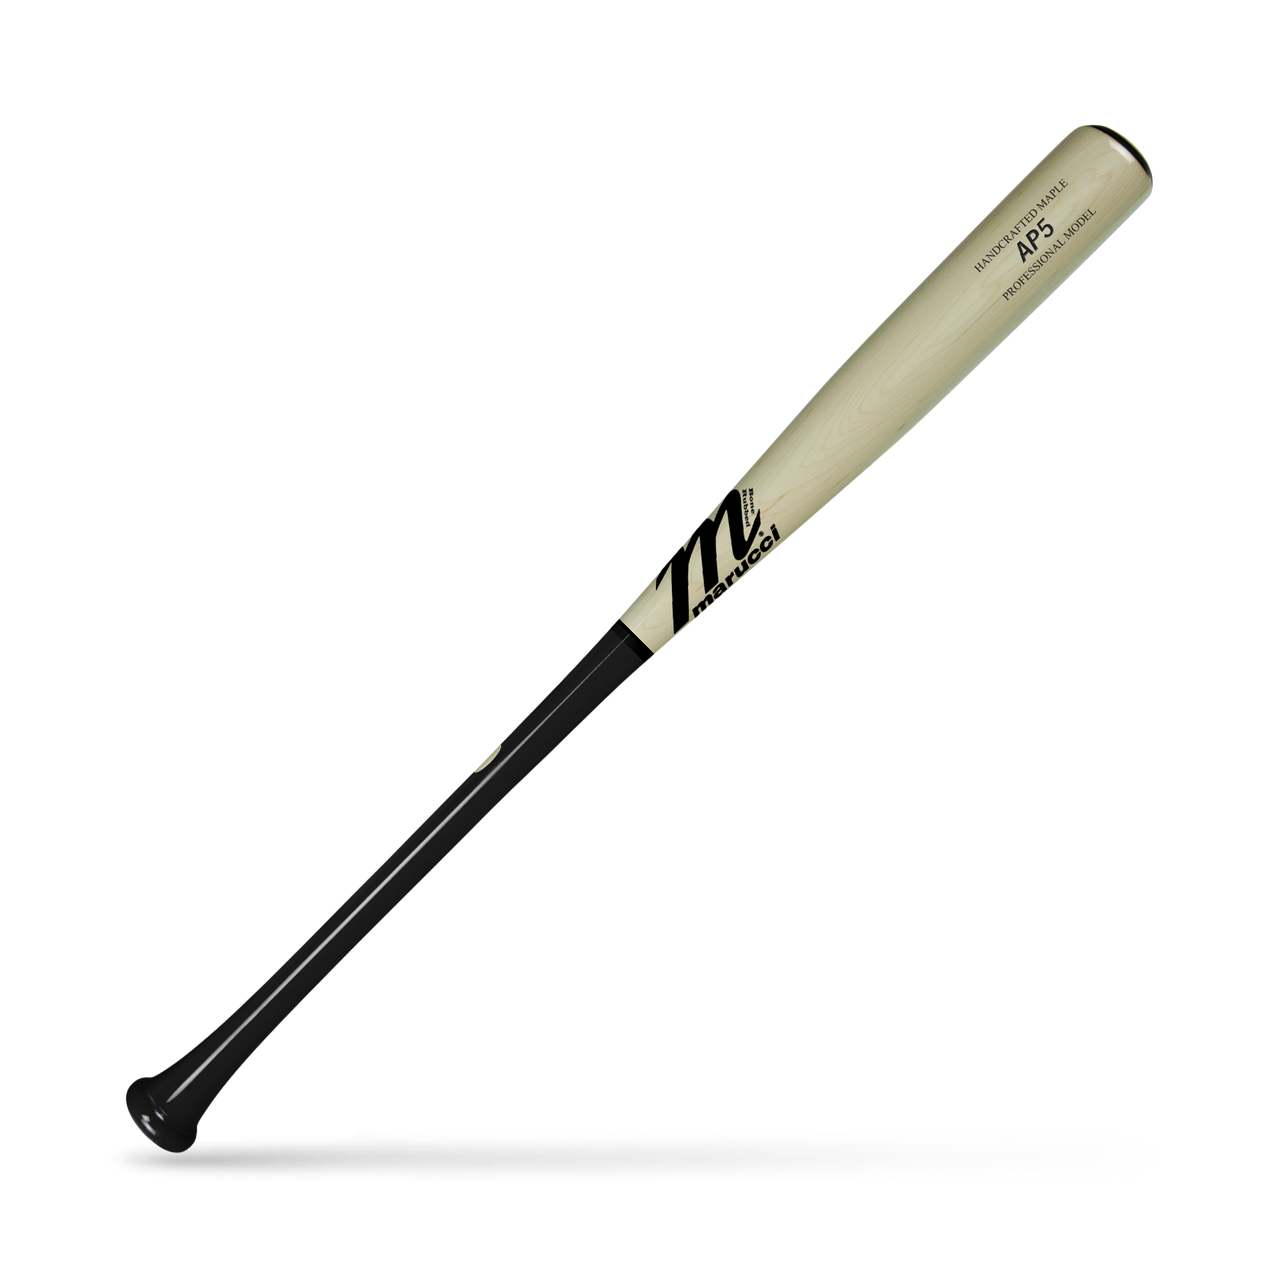 marrucci-ap5-pro-model-maple-wood-adult-baseball-bat-black-natural-33-inch MVE3AP5-BKN-33   The Marucci AP5 Albert Pujols Maple Wood Bat is a top-of-the-line